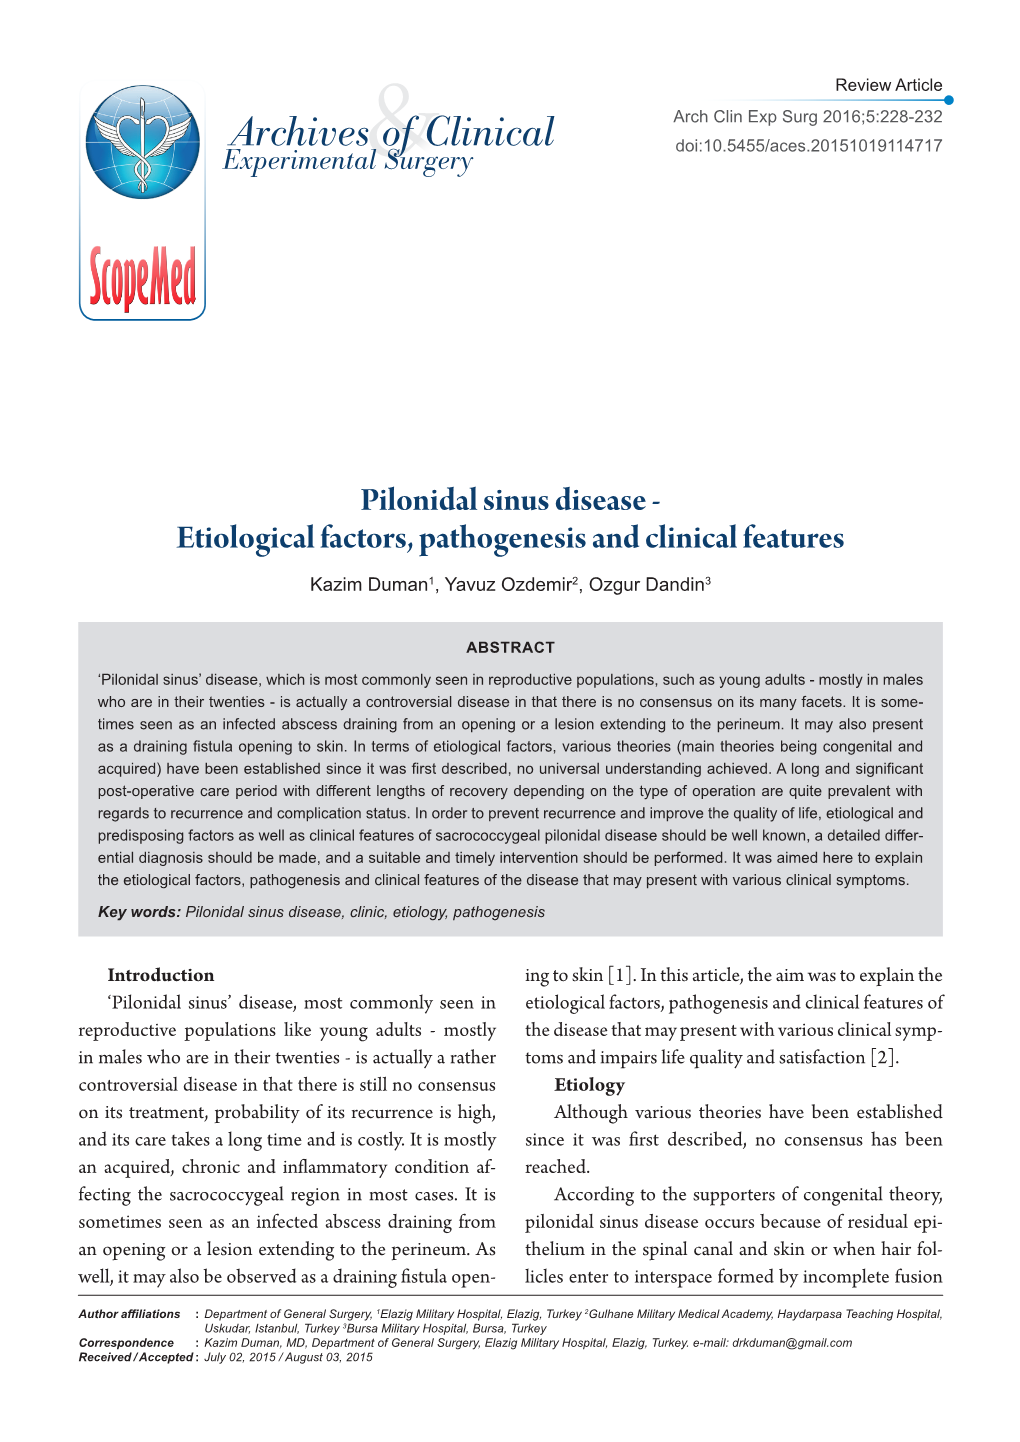 Pilonidal Sinus Disease-Etiological Factors, Pathogenesis and Clinical